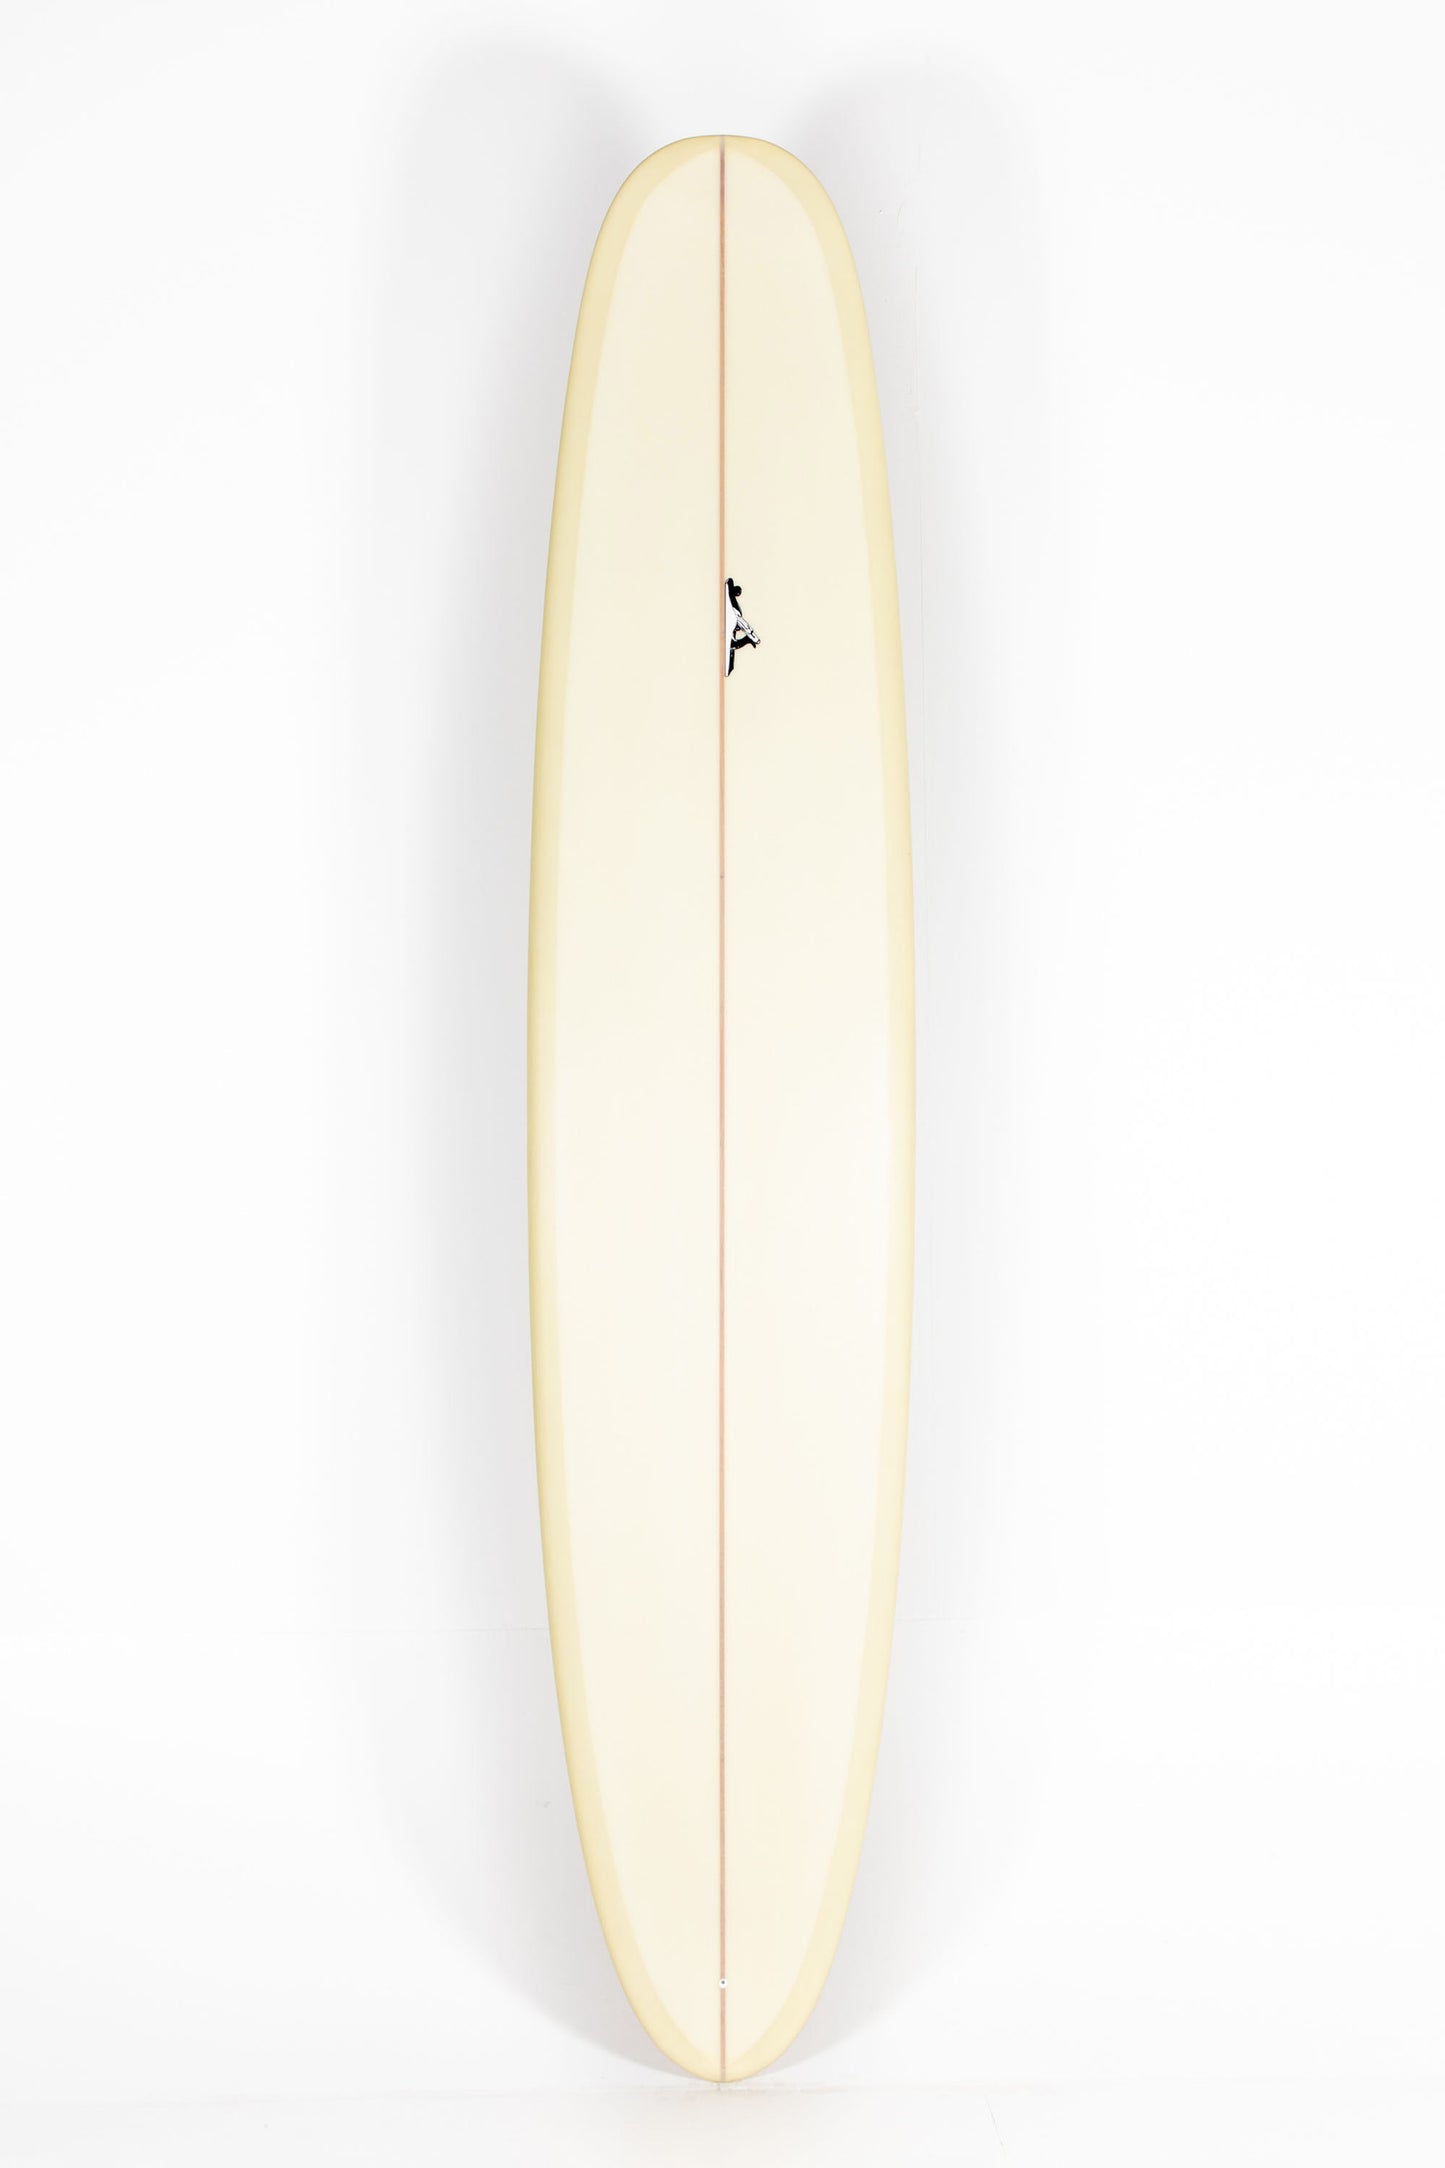 Pukas Surf shop - Thomas Surfboards - WIZL - 9'4"x22 3/4 x 2 3/4 - Ref. WIZL94